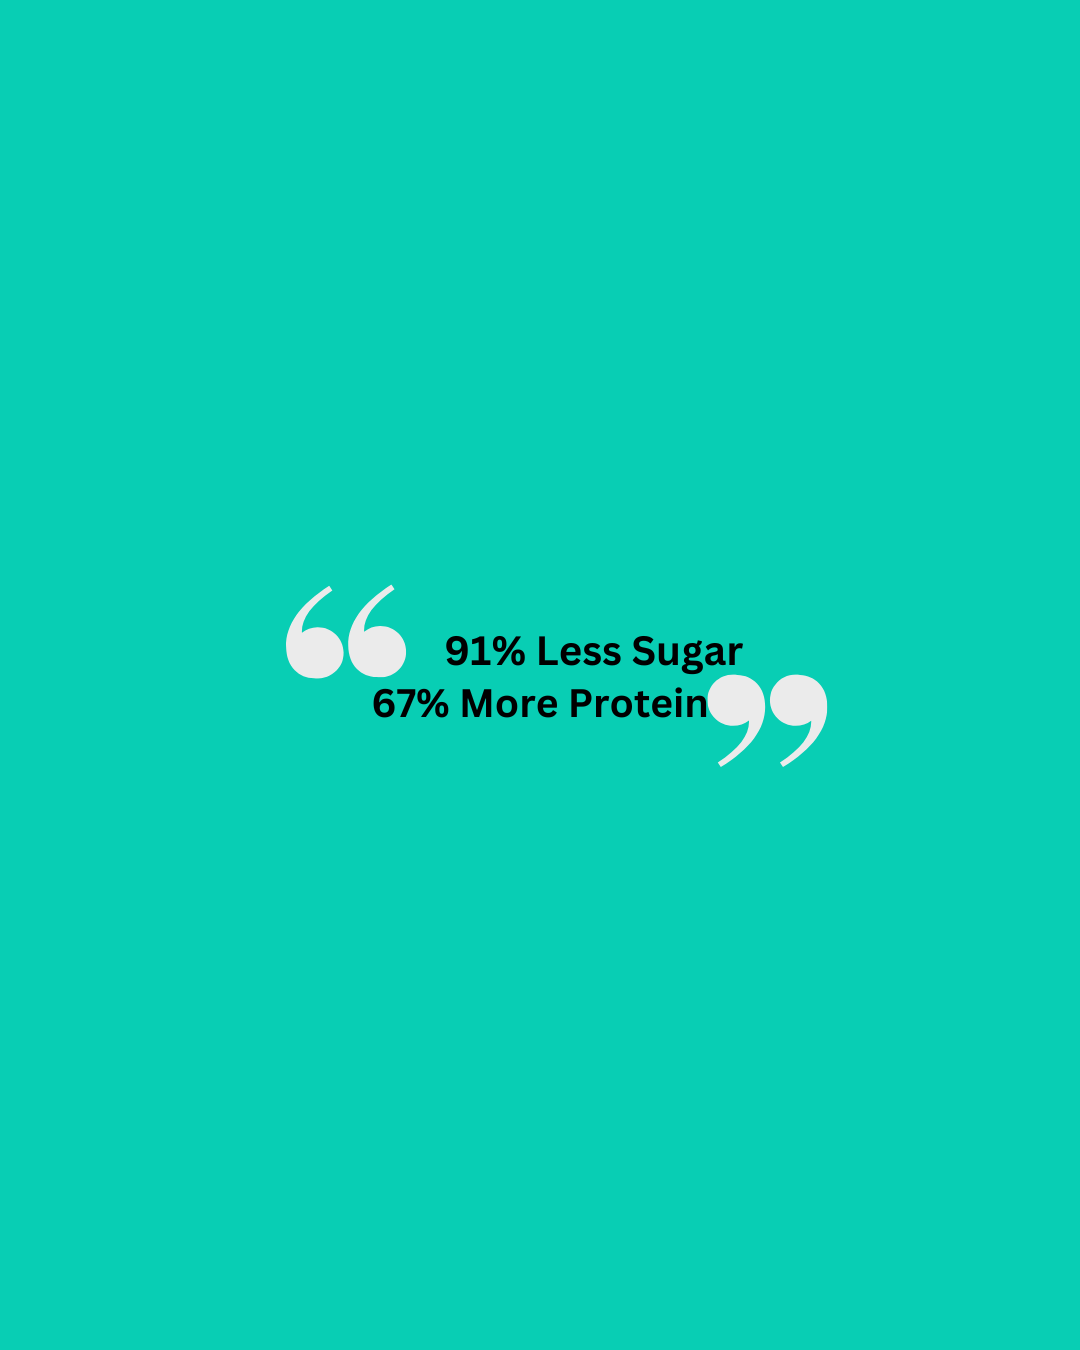 Whole Supp has 90% less sugar than SlimFast 